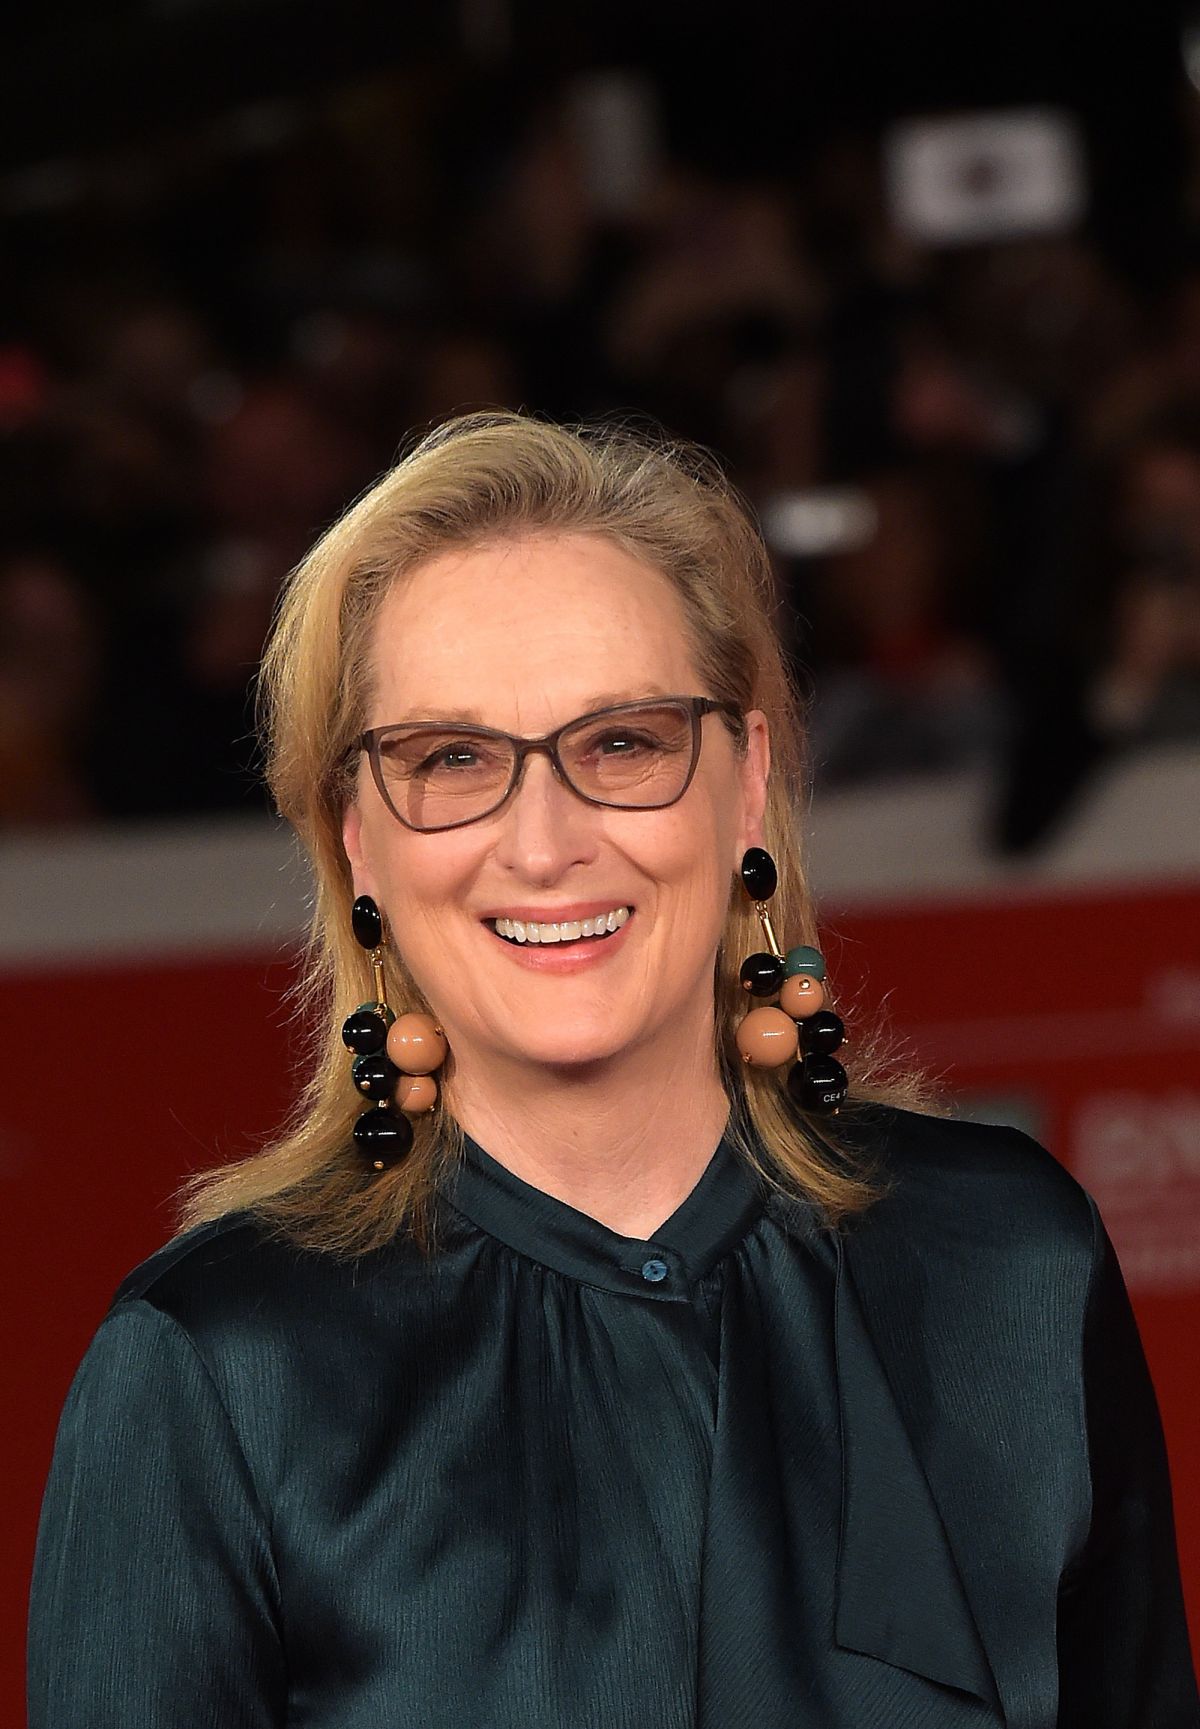 Florence Meryl Streep